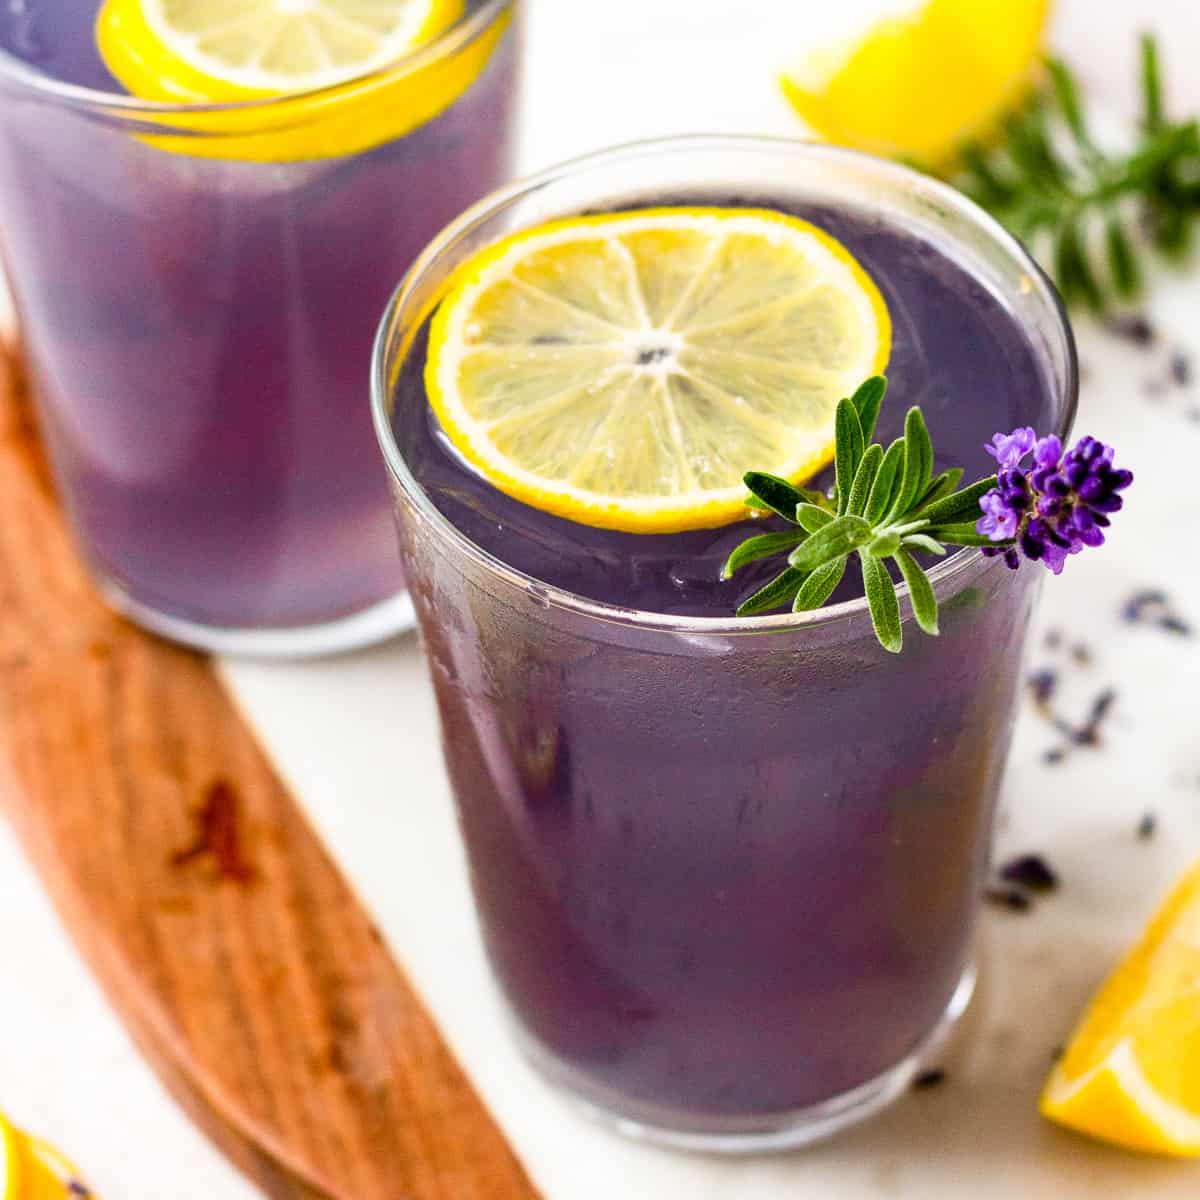 https://www.thecookierookie.com/wp-content/uploads/2022/05/featured-lavender-lemonade-recipe.jpg